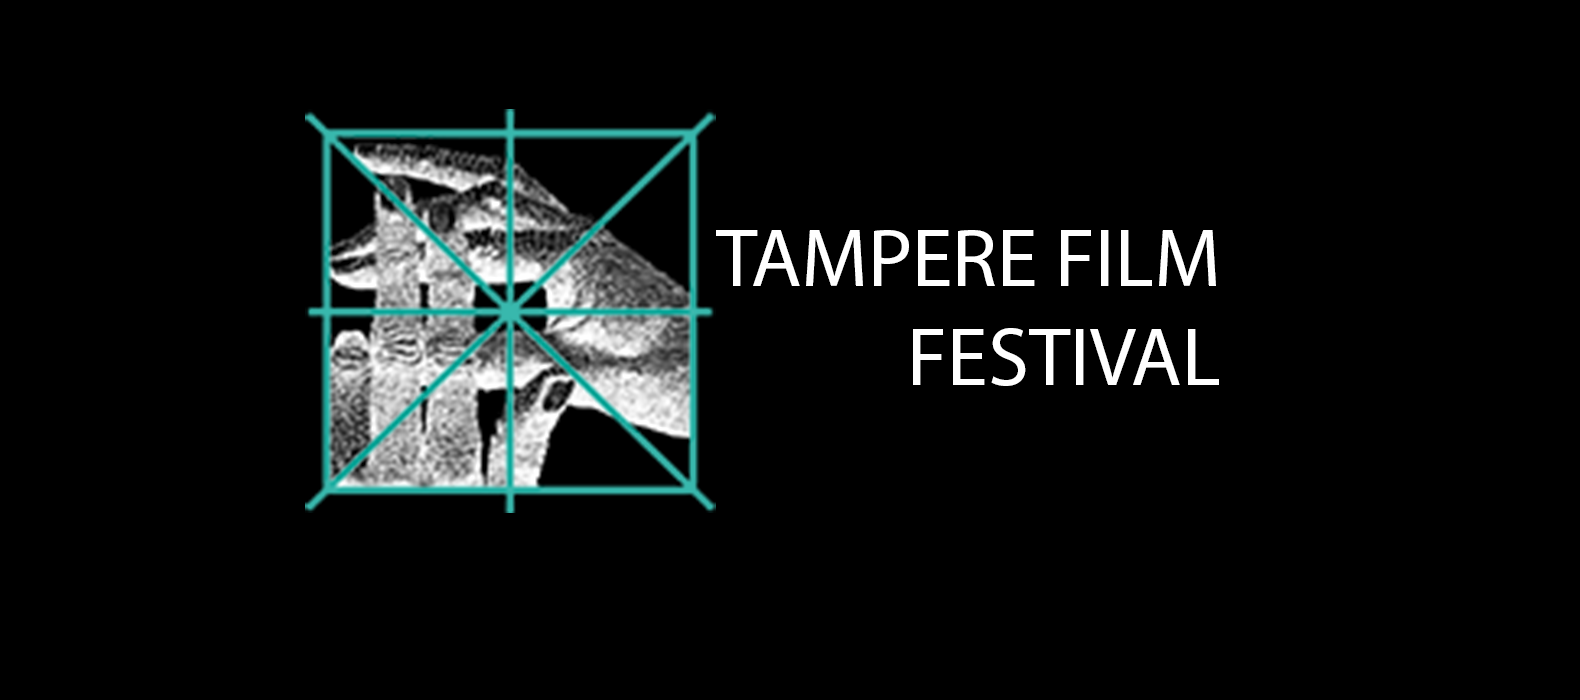 جشنواره فیلم تامپره